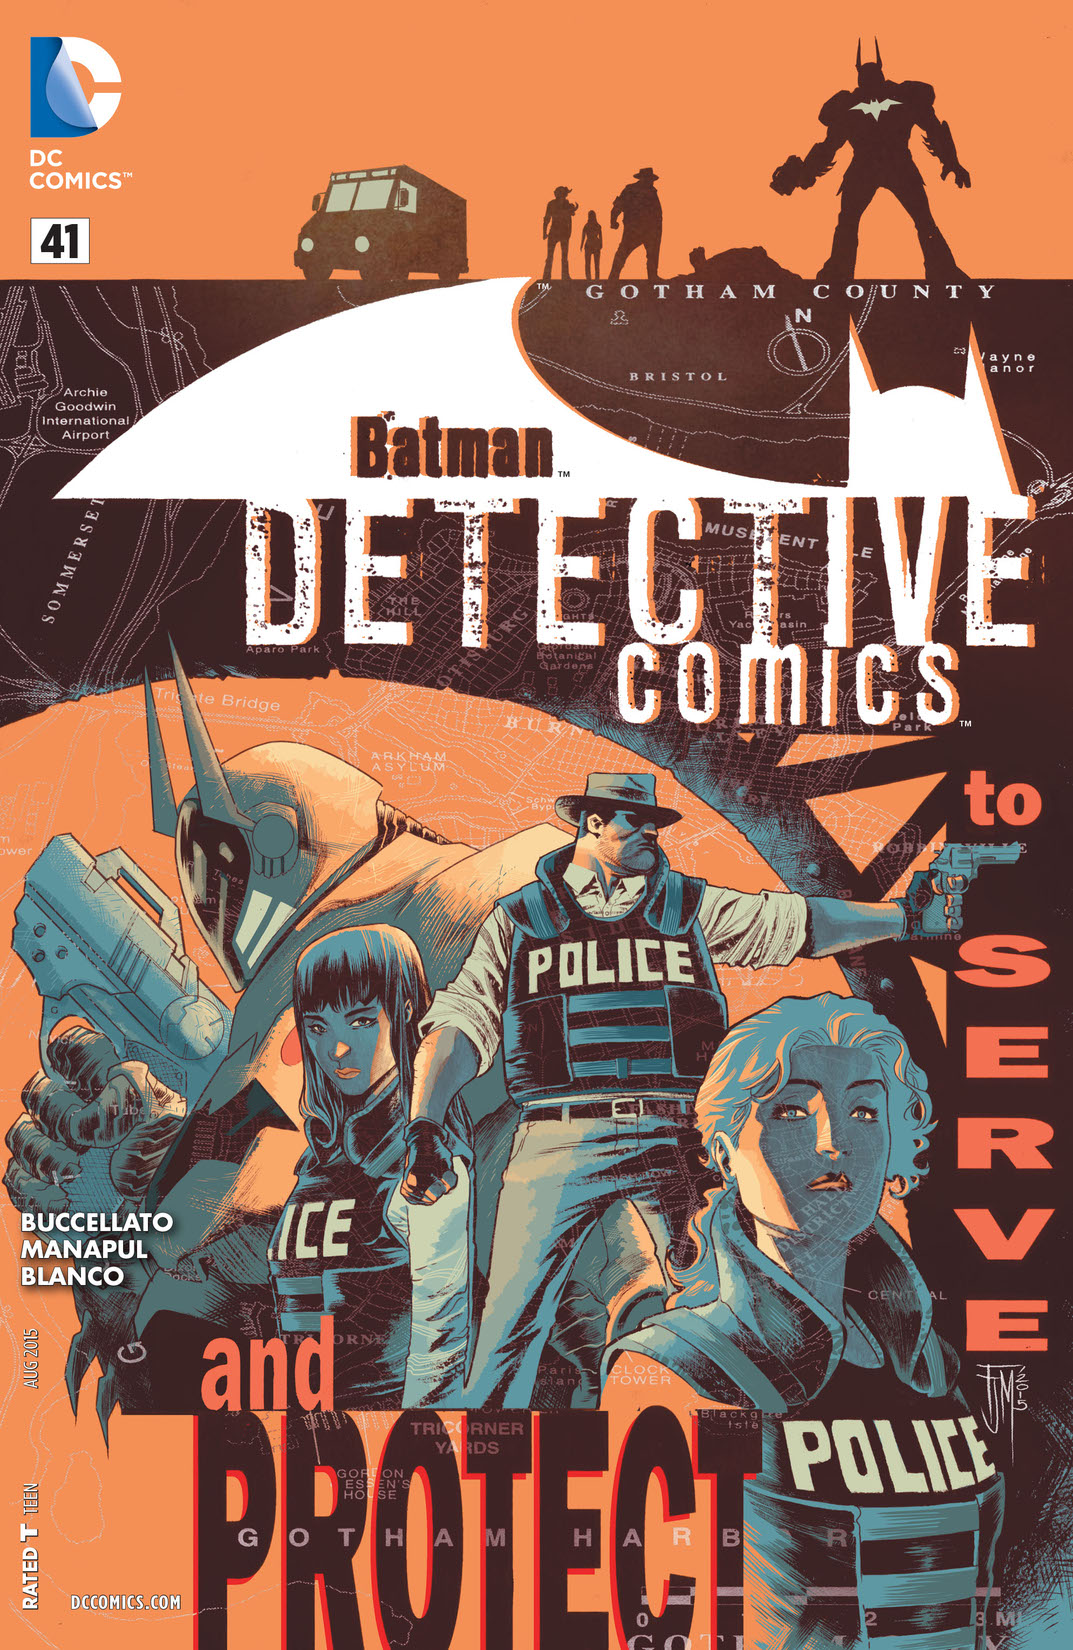 Detective Comics (2011-) #41 preview images